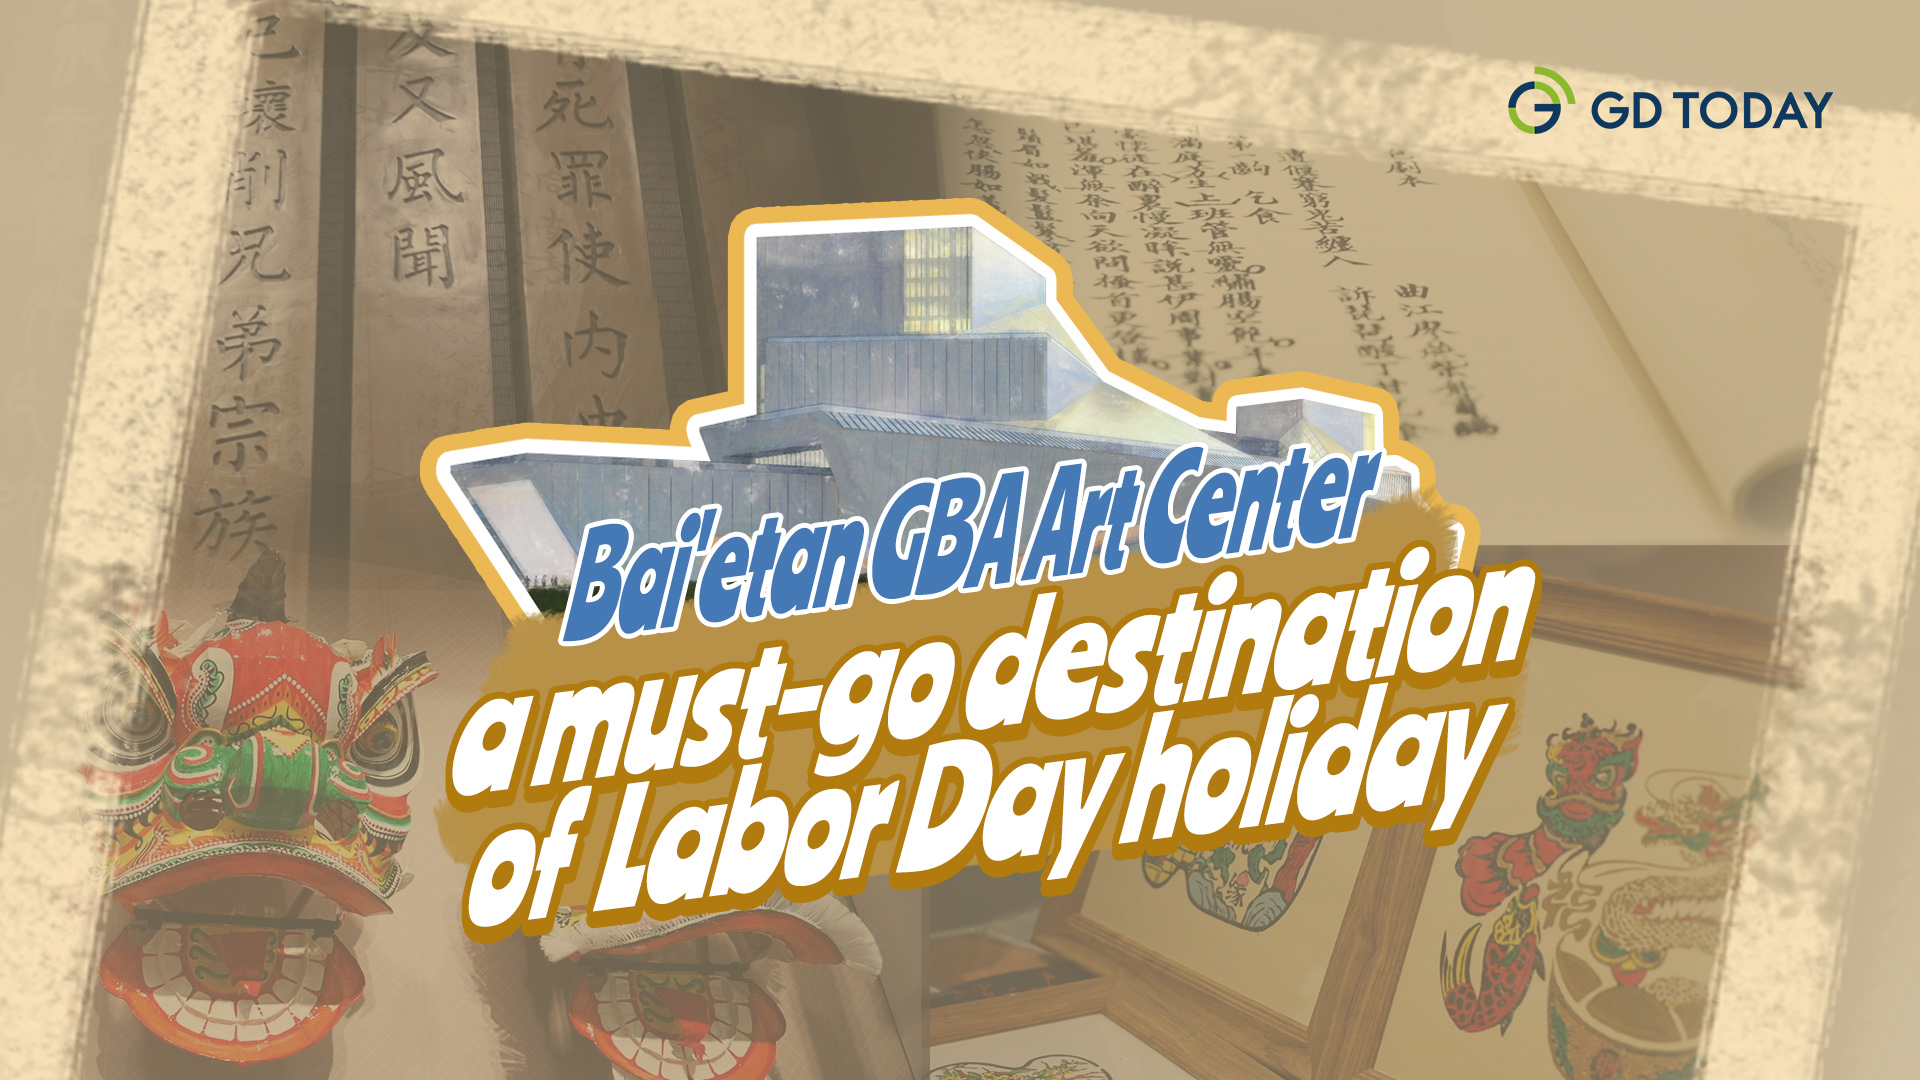 Vlog | Bai’etan Greater Bay Area Art Center, a must-go destination of this Labor Day holiday